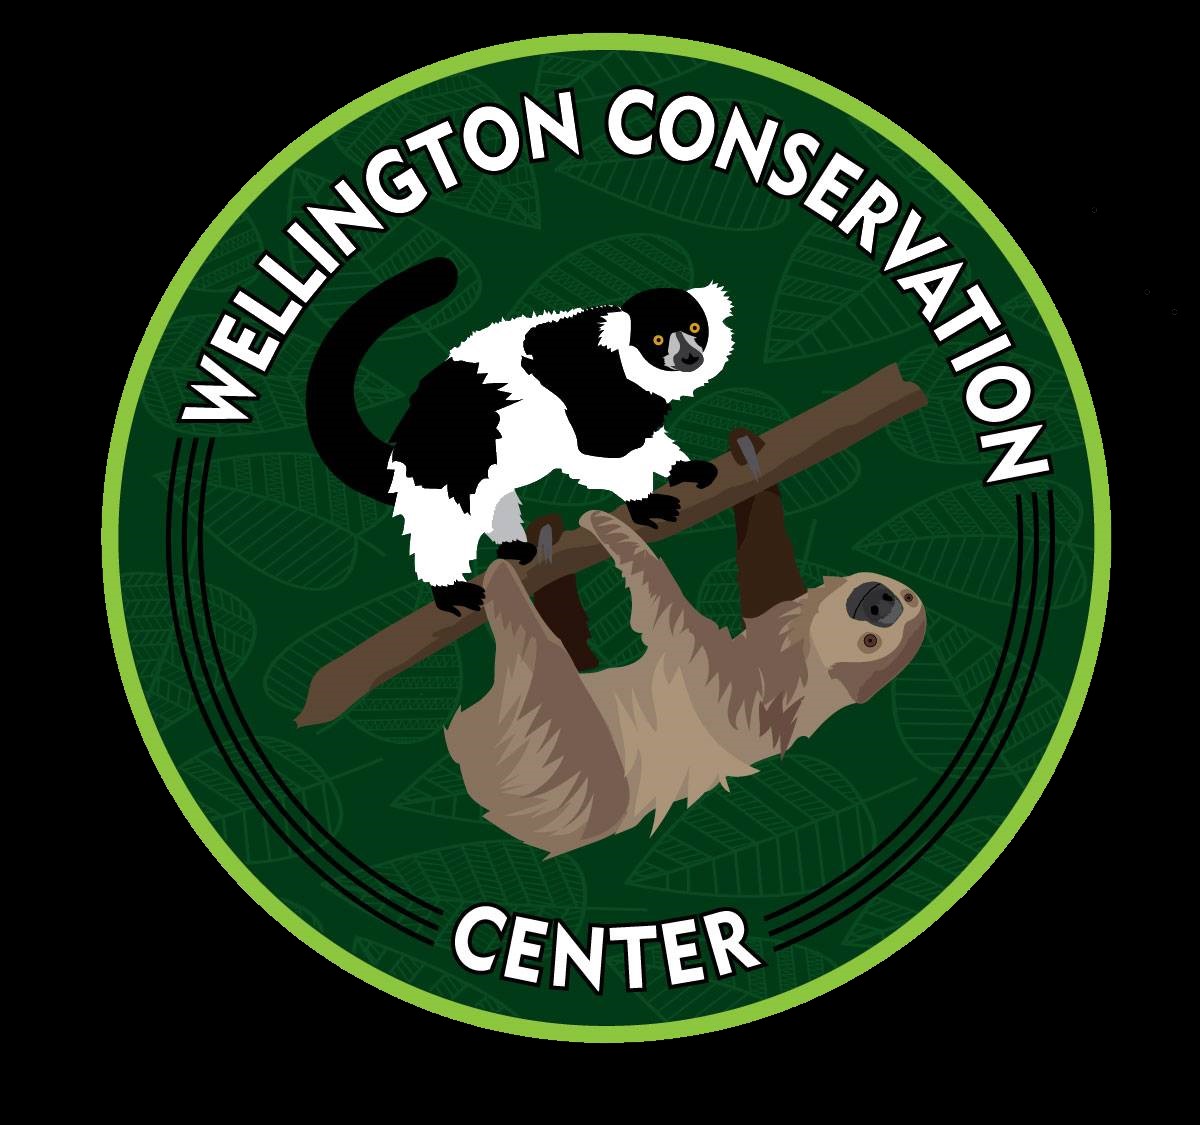 Wellington Conservation Center